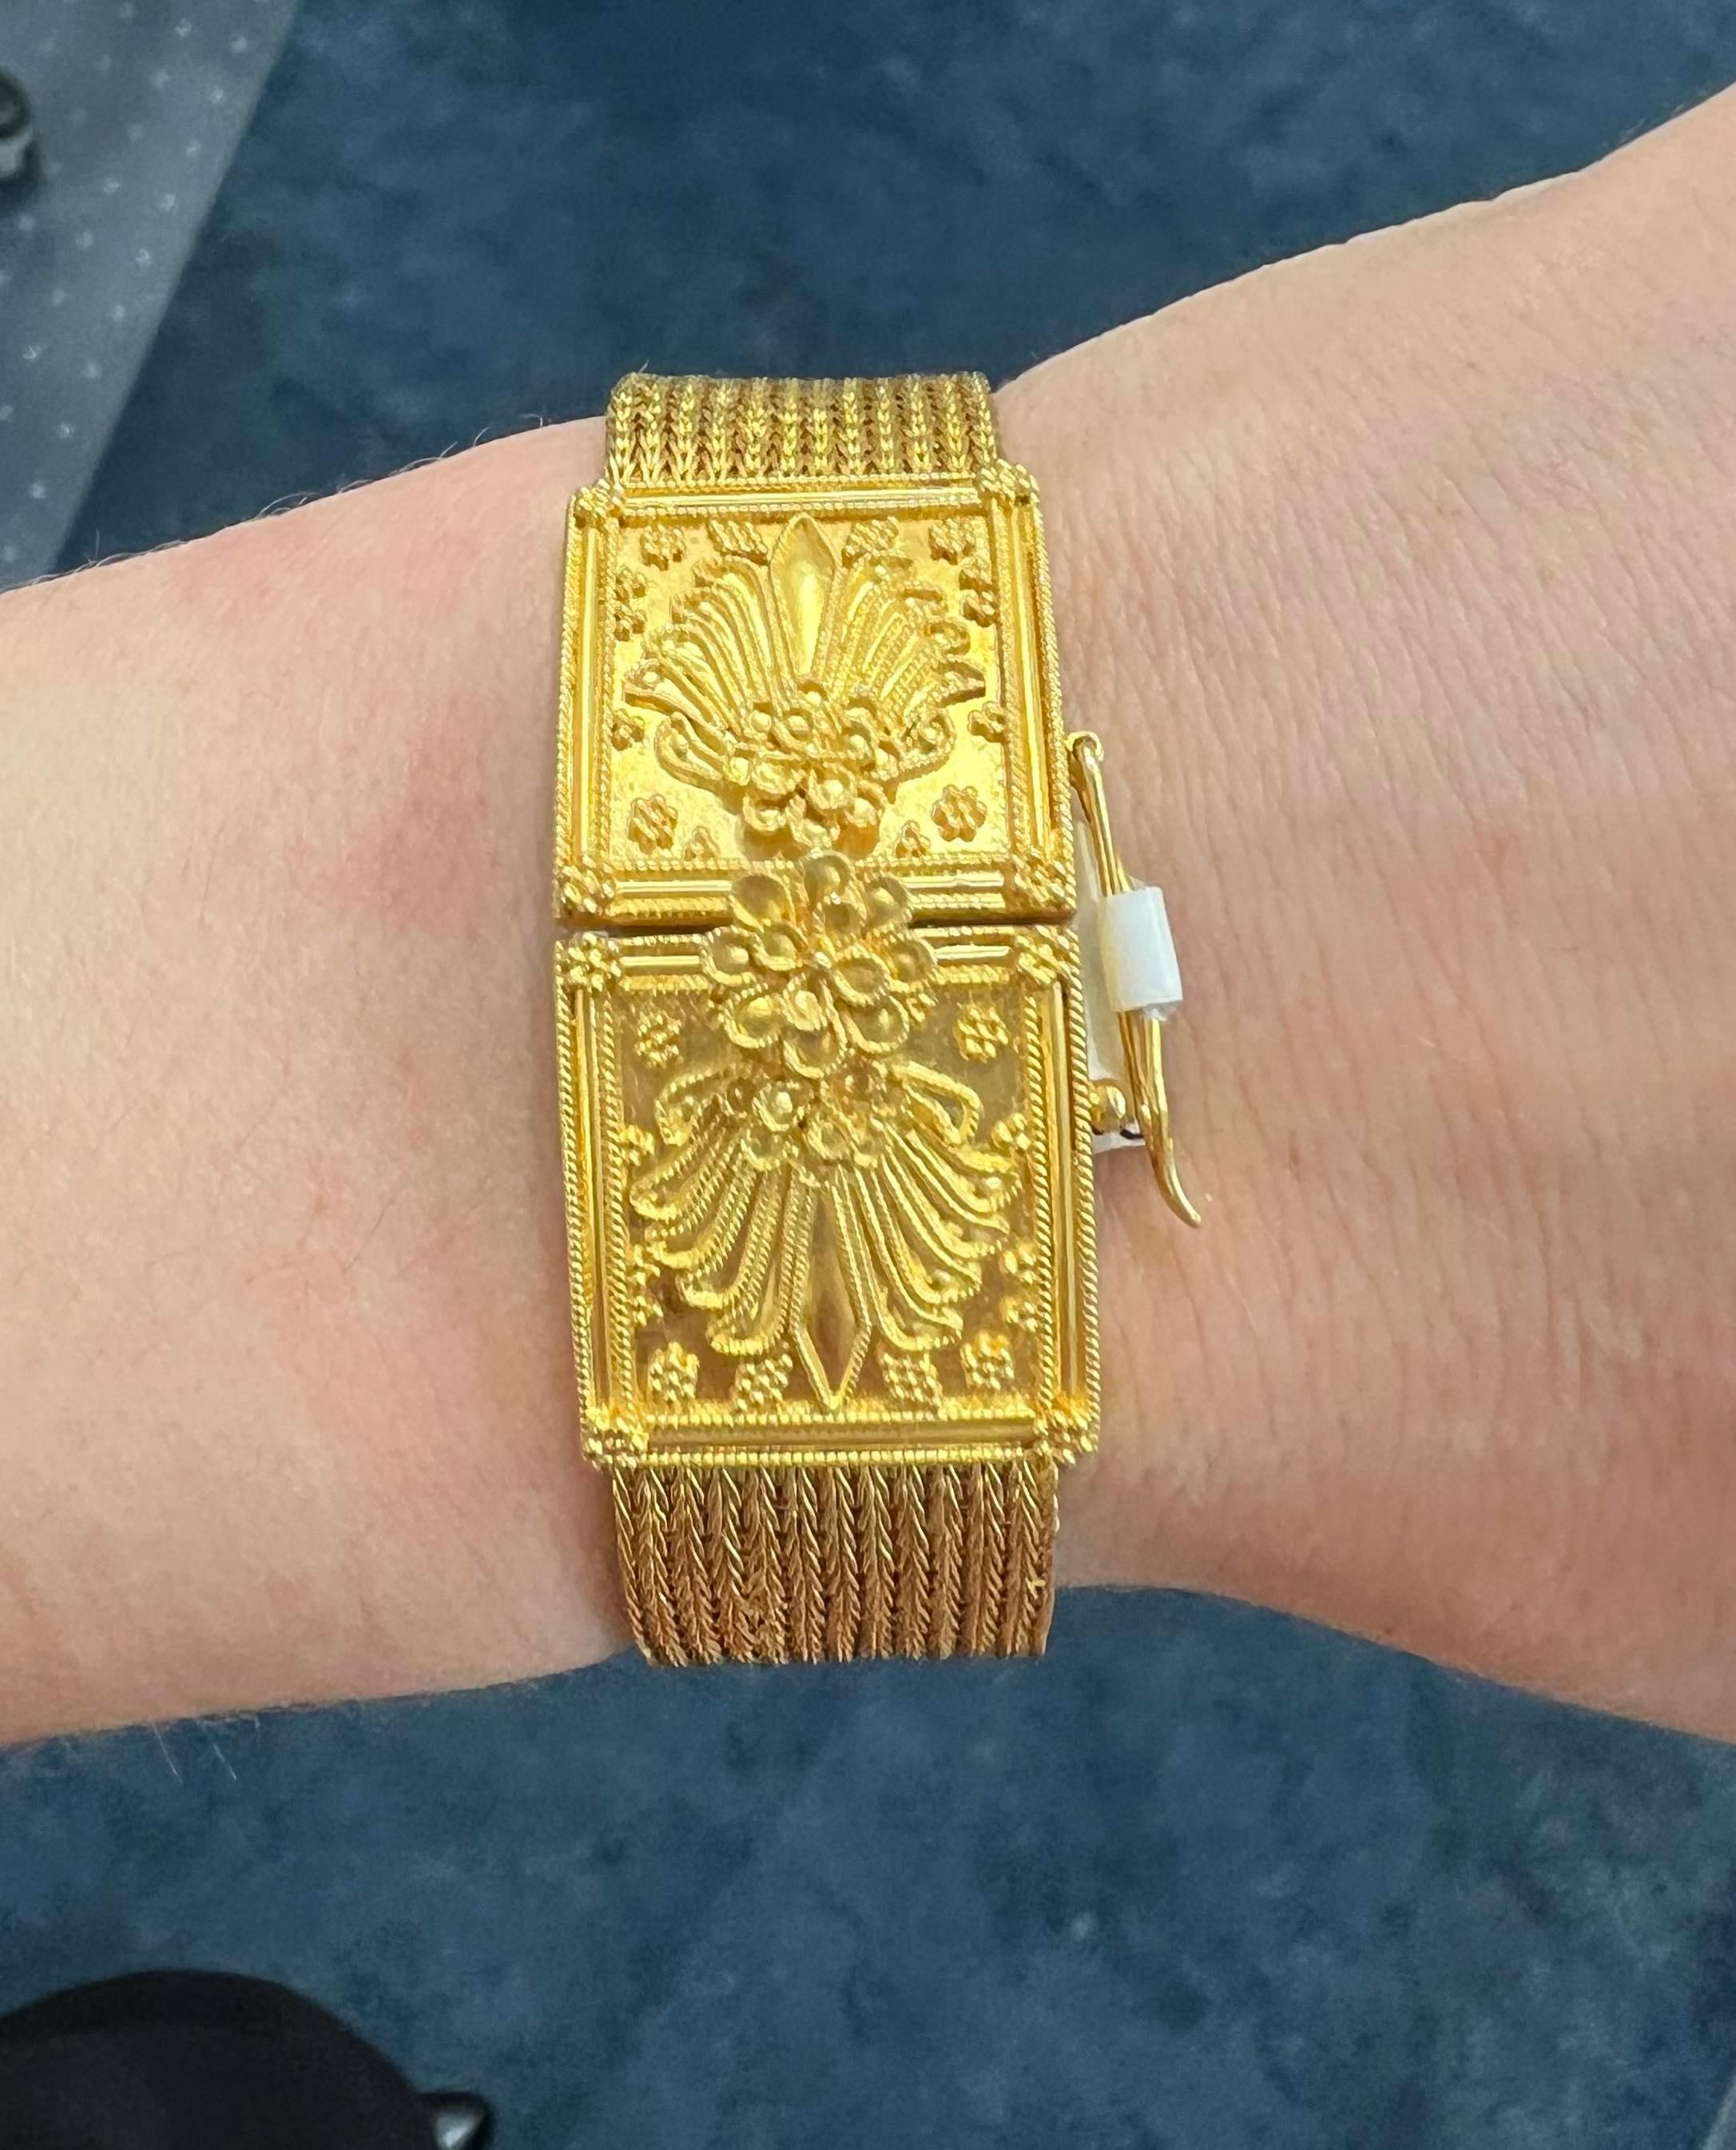  LALAoUNIS Vintage Yellow Gold Woven Bracelet For Sale 4